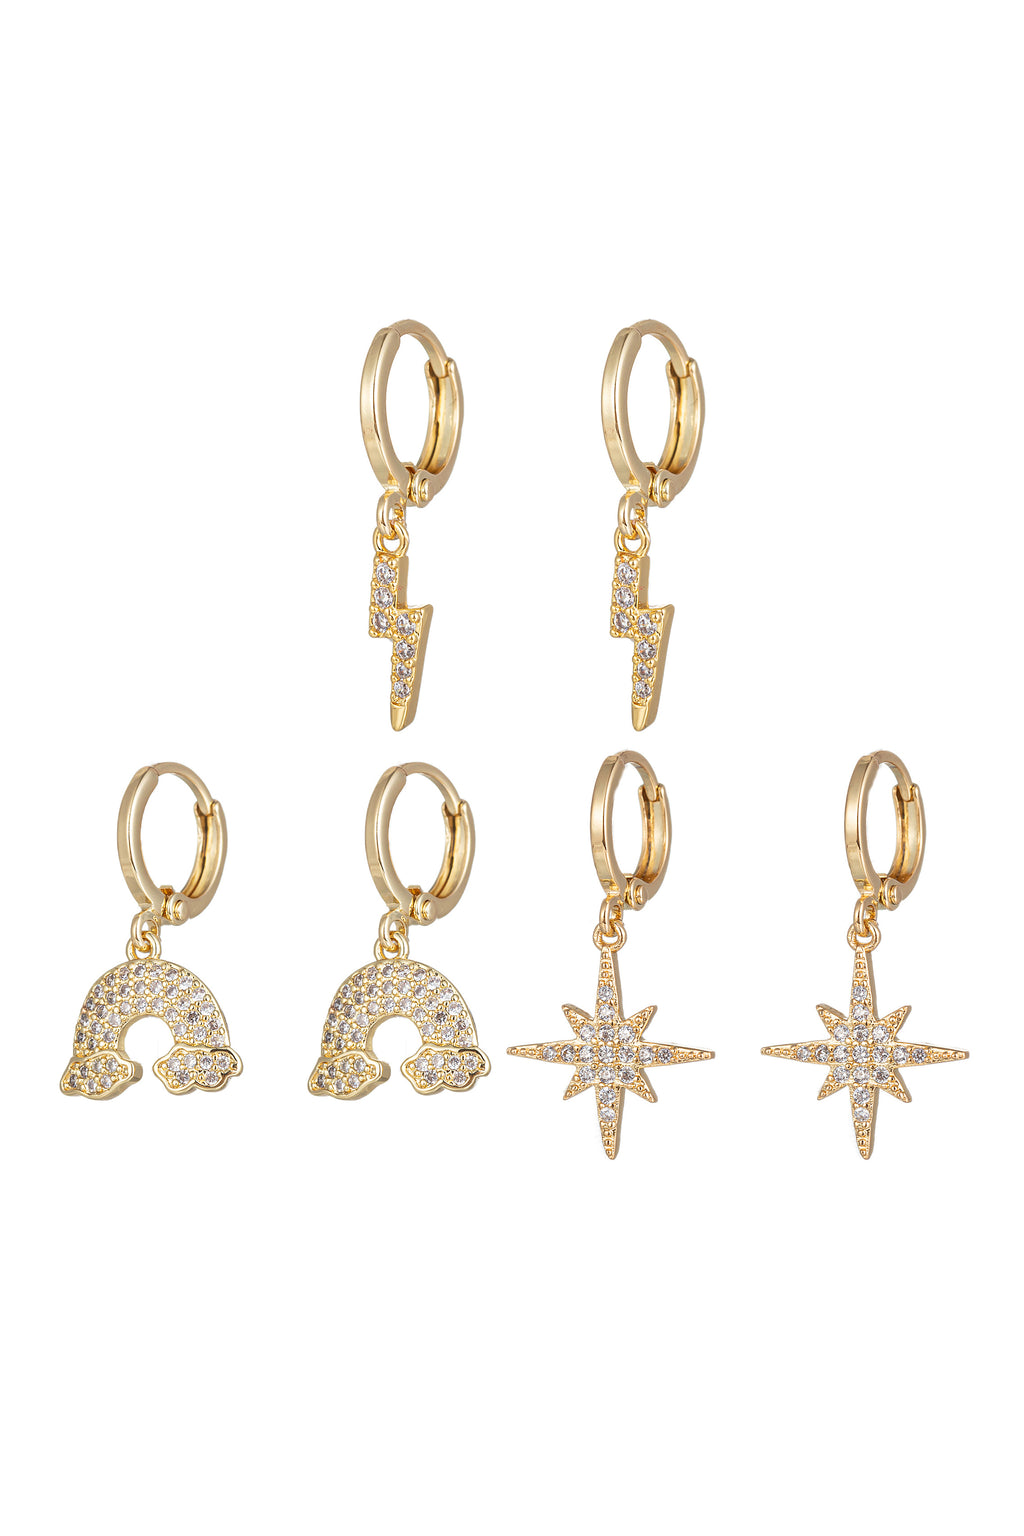 Lightning bolt and star 18k gold plated huggie earring set.